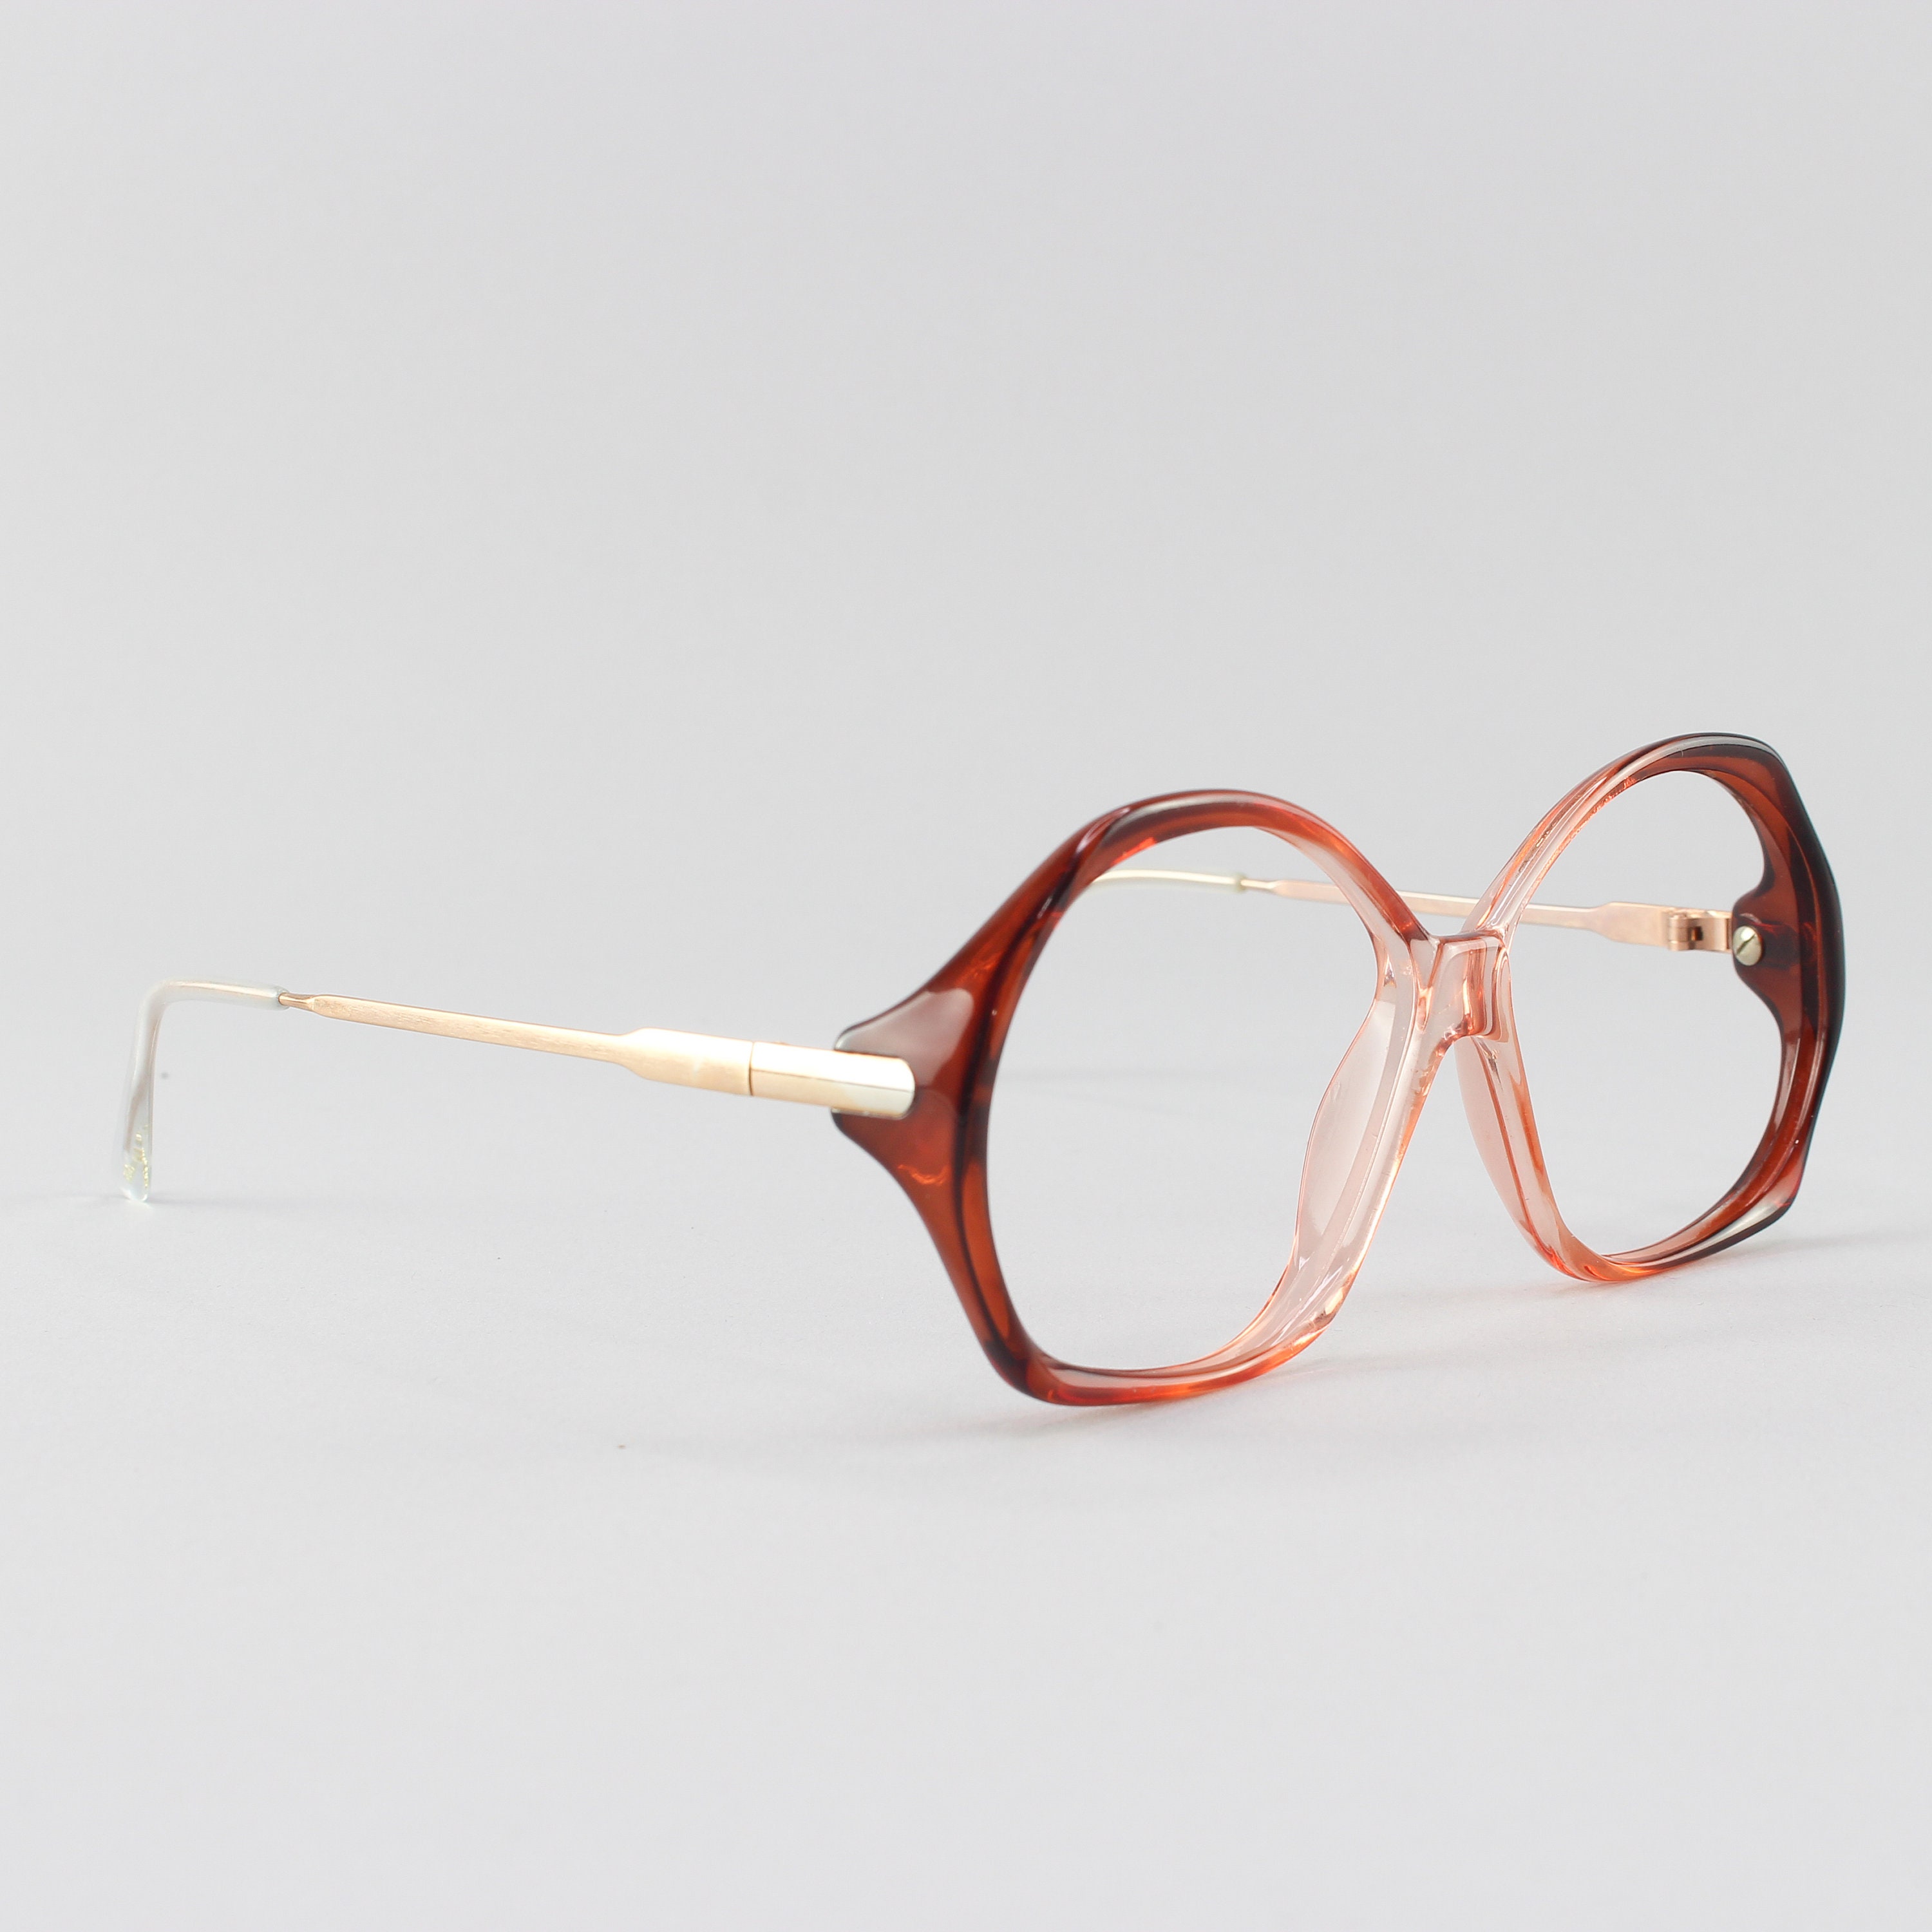 Vintage Glasses Round 80s Eyeglasses Pink Eyeglass Frame 1980s